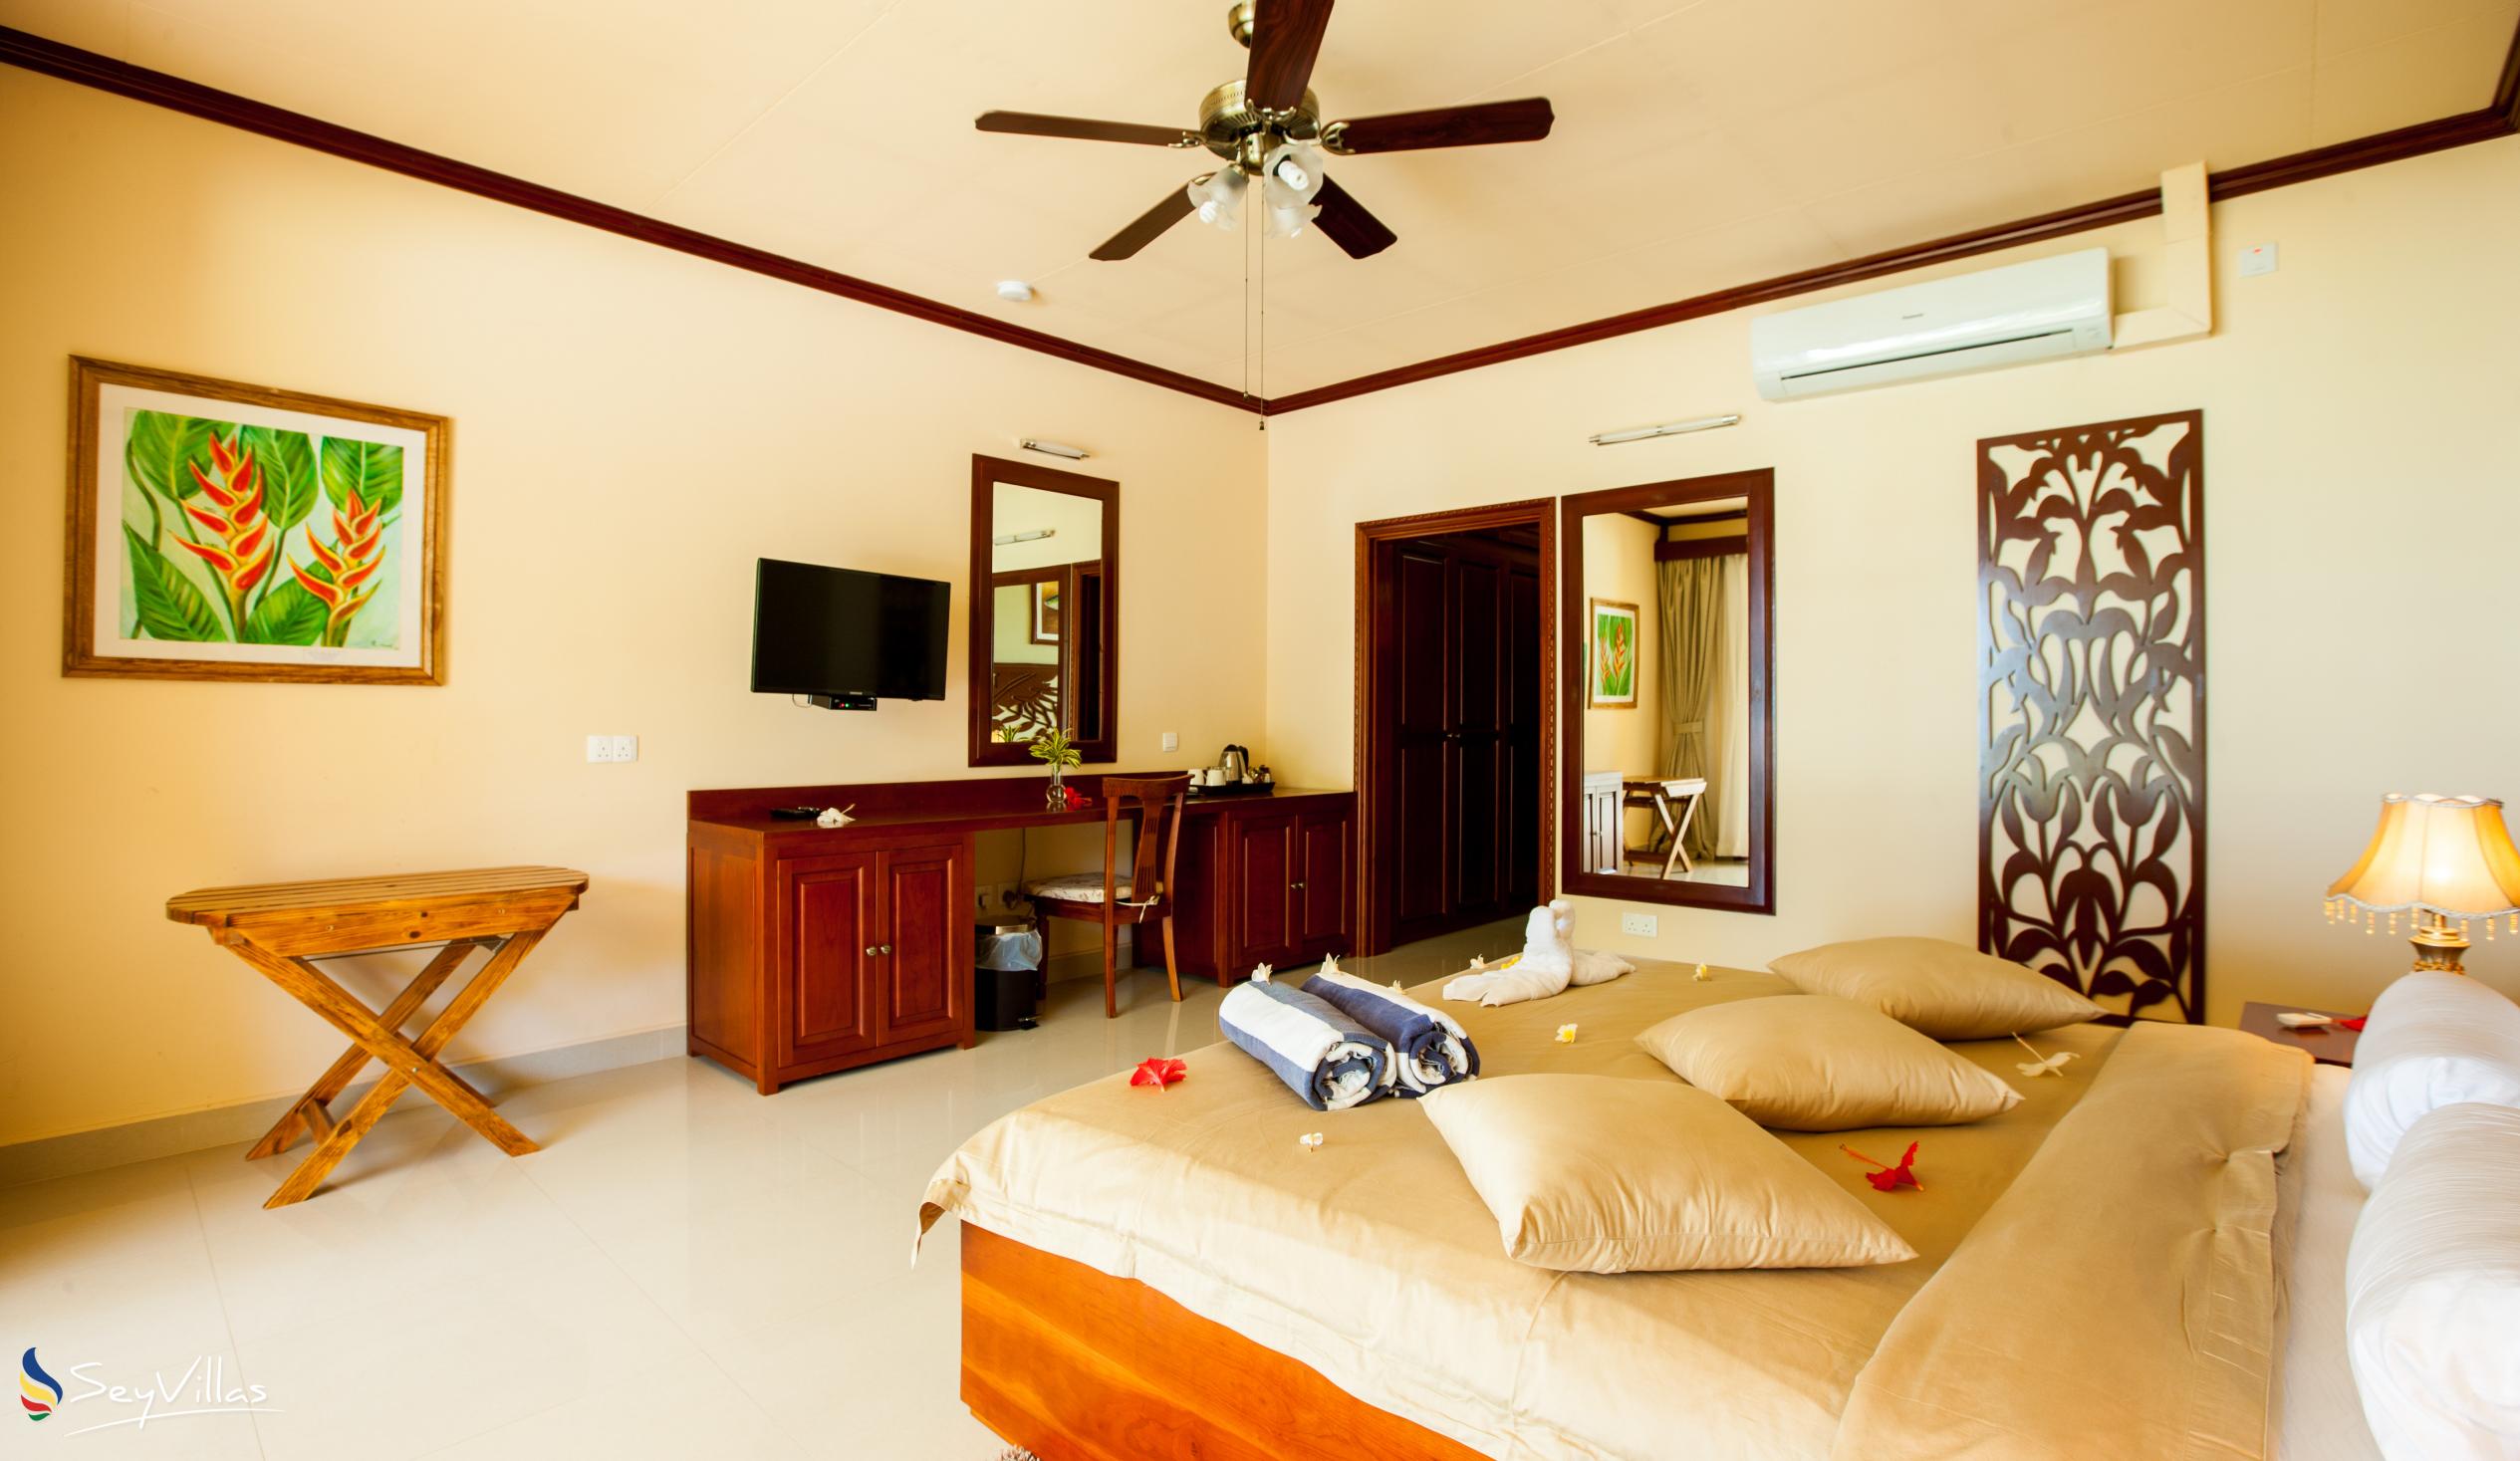 Photo 12: Pirogue Lodge - Standard Room - Praslin (Seychelles)